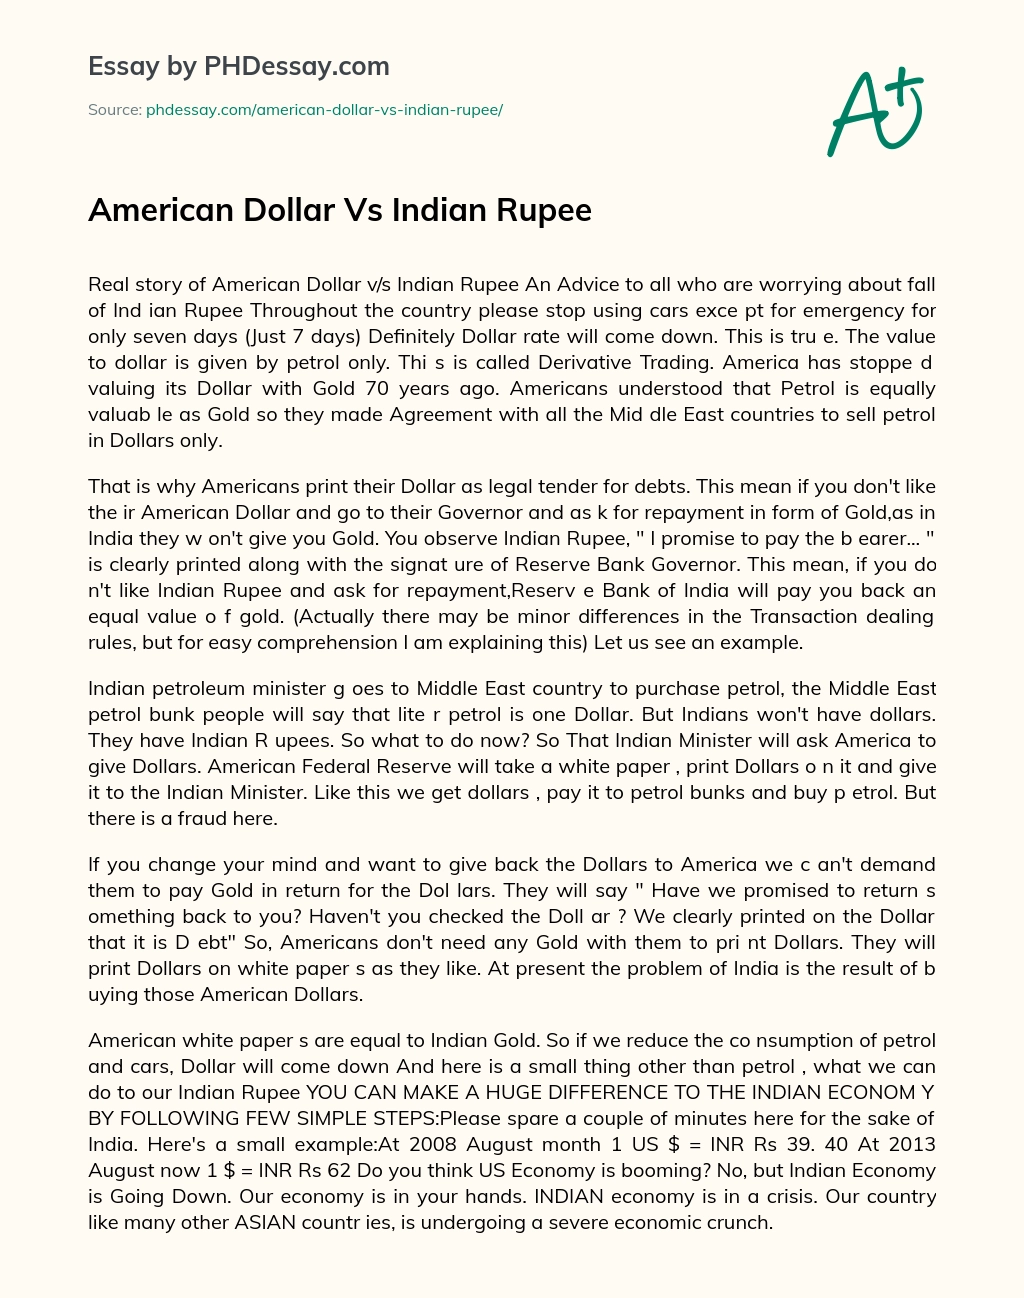 American Dollar Vs Indian Rupee essay